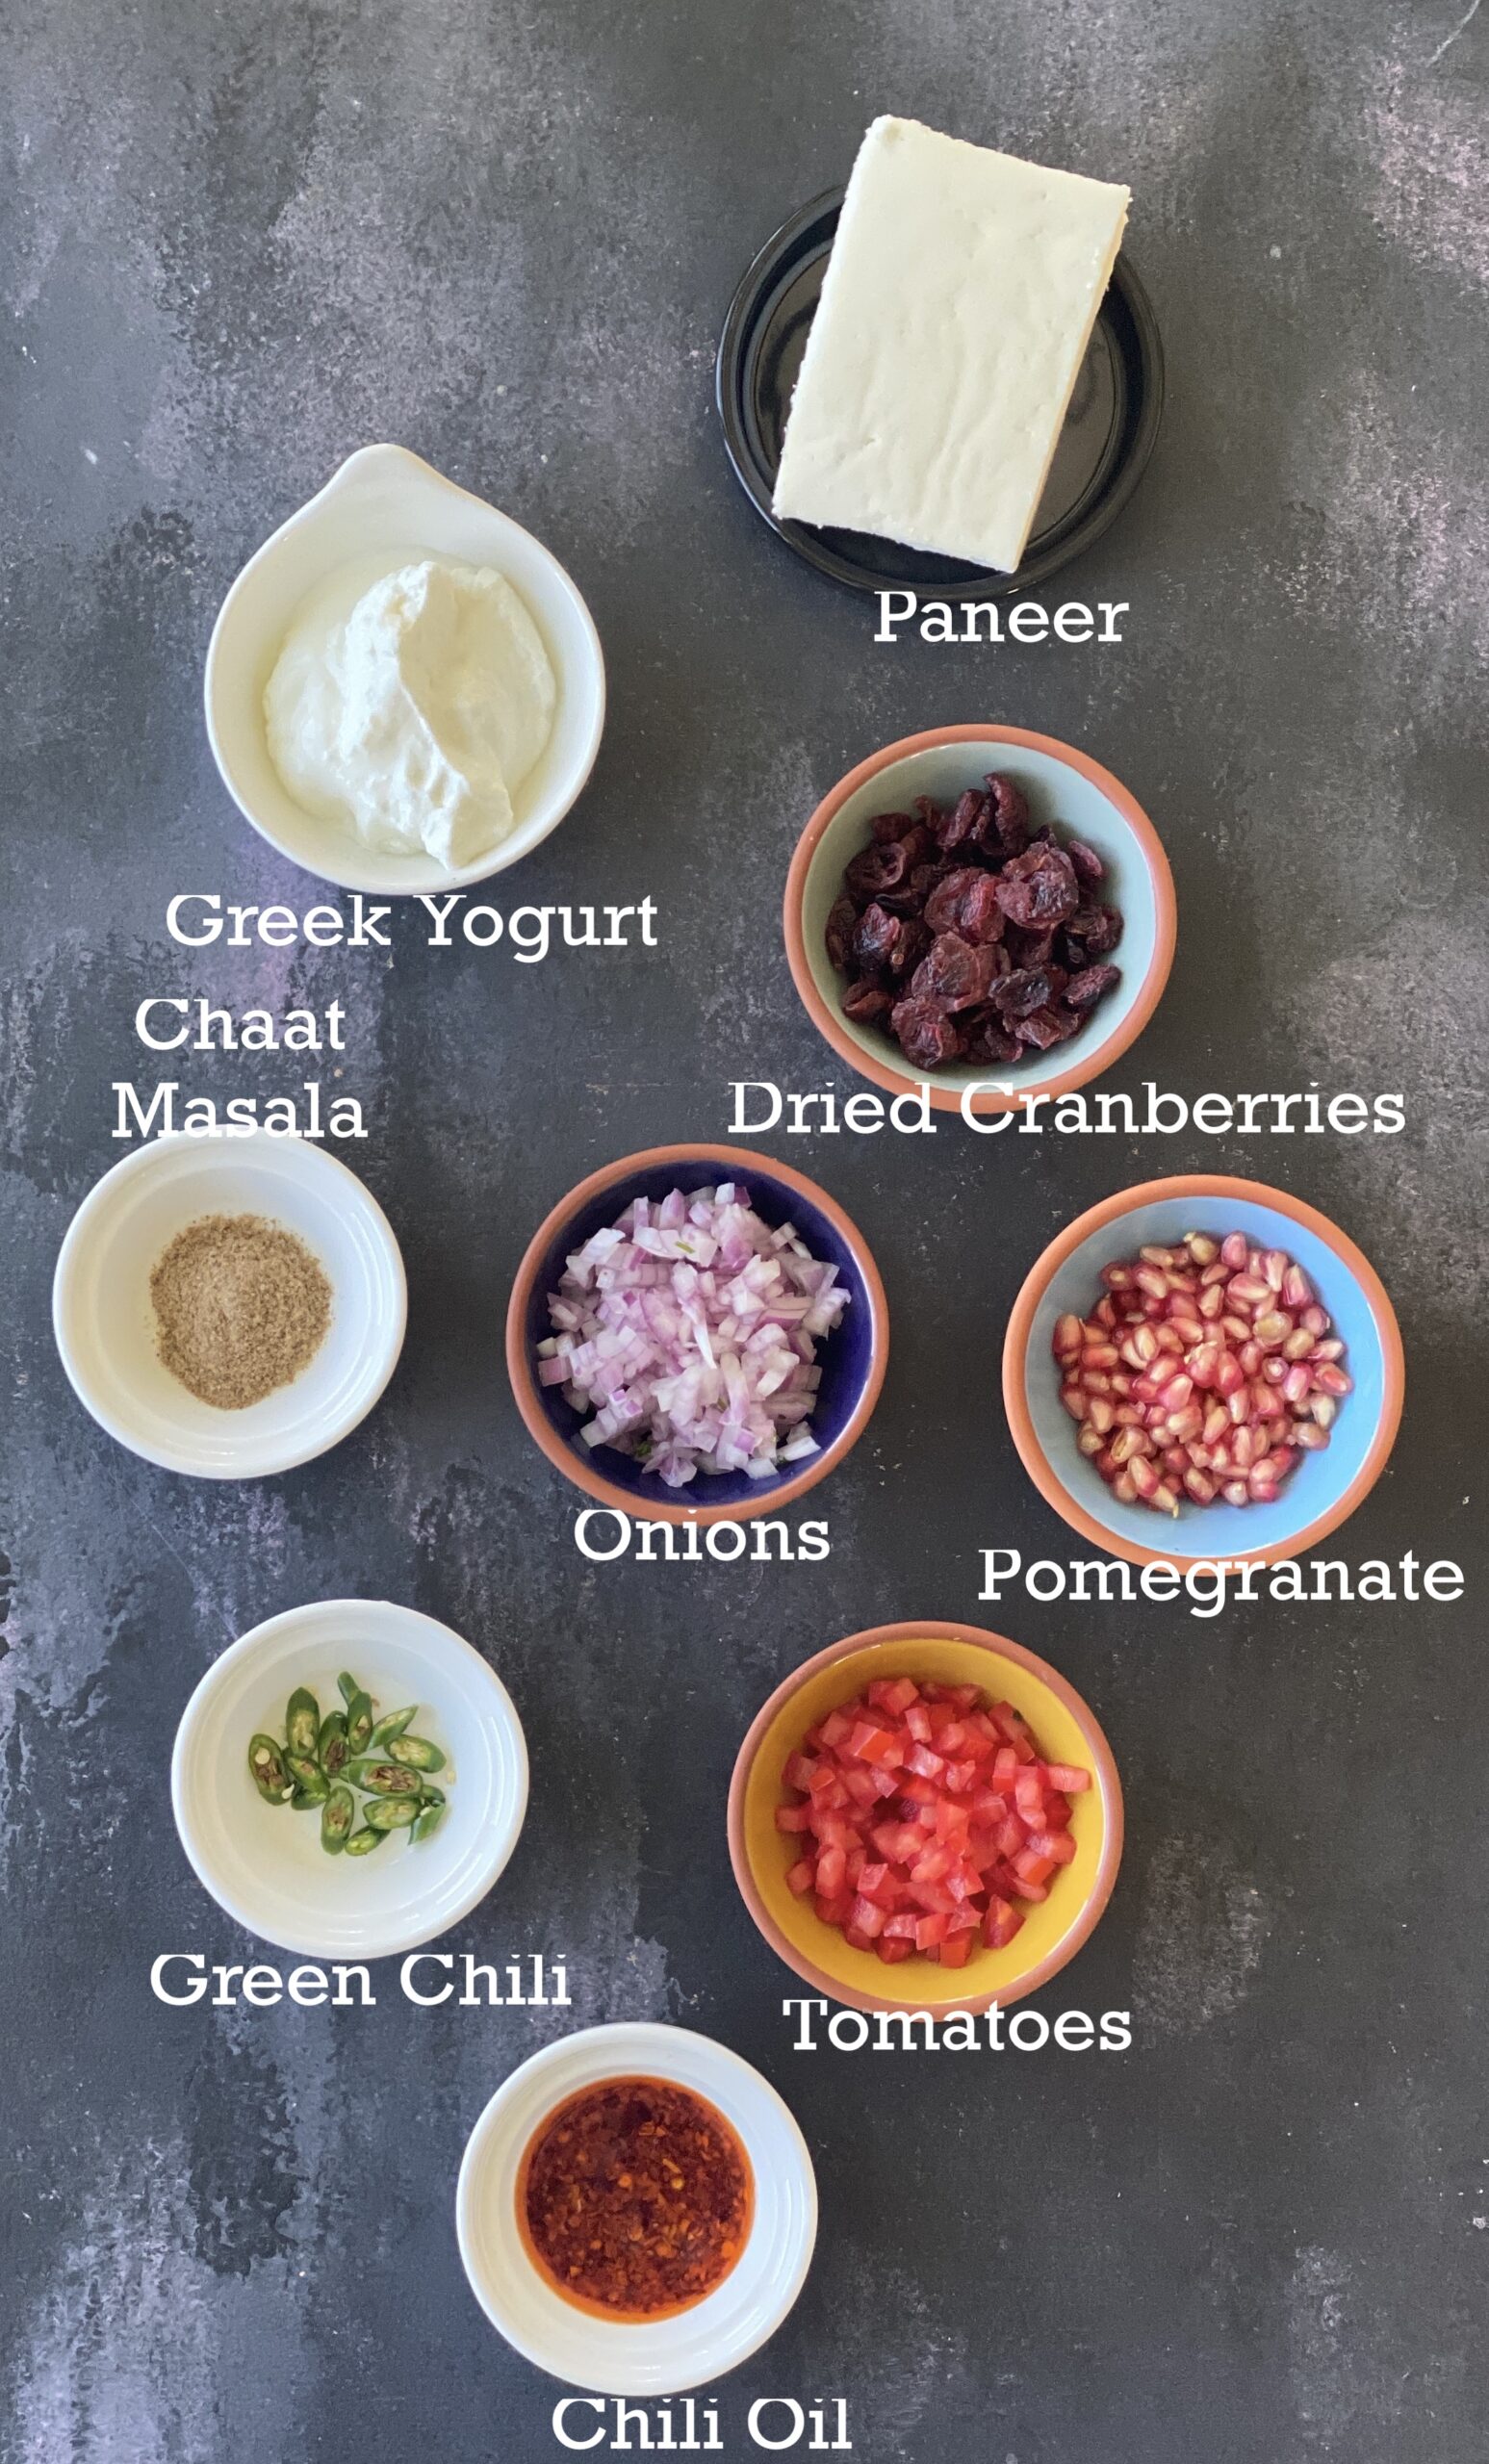 Ingredients for paneer board; paneer, Greek yogurt and add-ins and toppings arranged on a black board. 